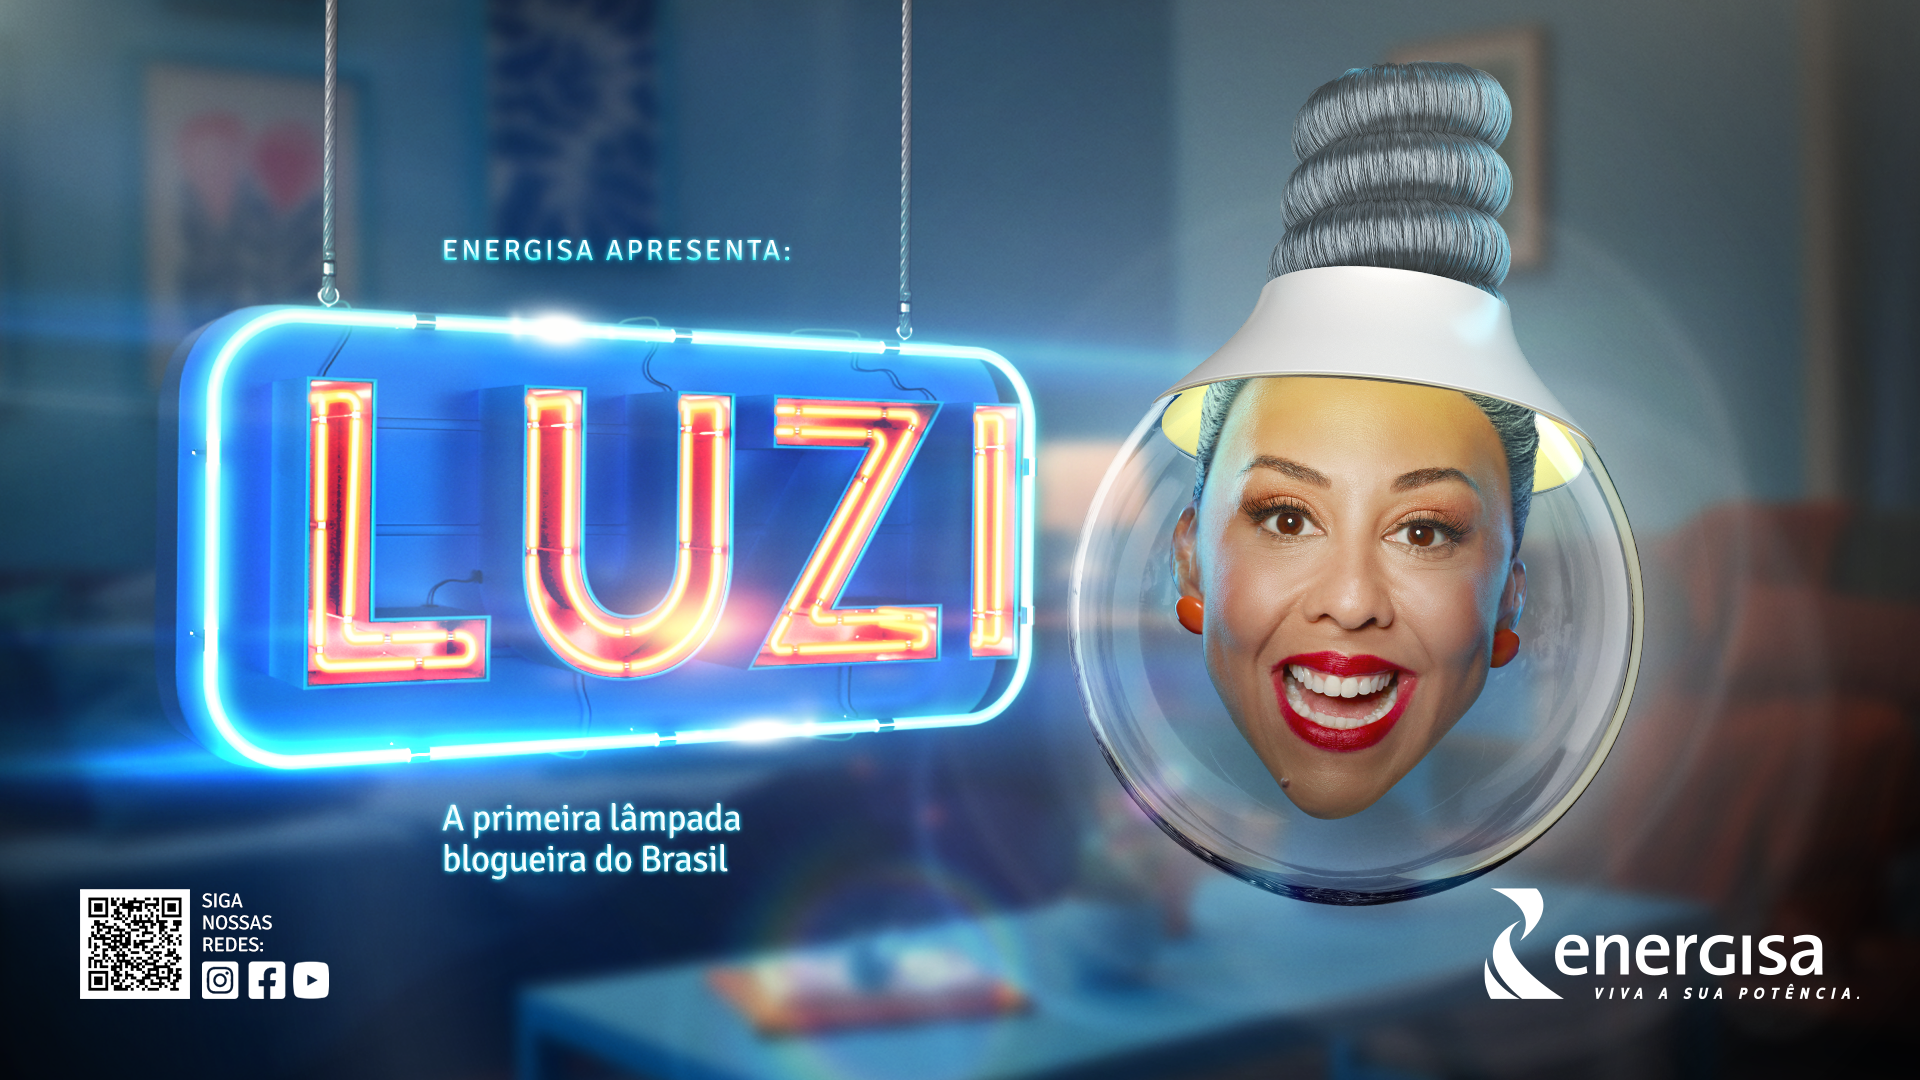 Evelyn Castro brilha como Luzi, a primeira lâmpada influenciadora do Brasil